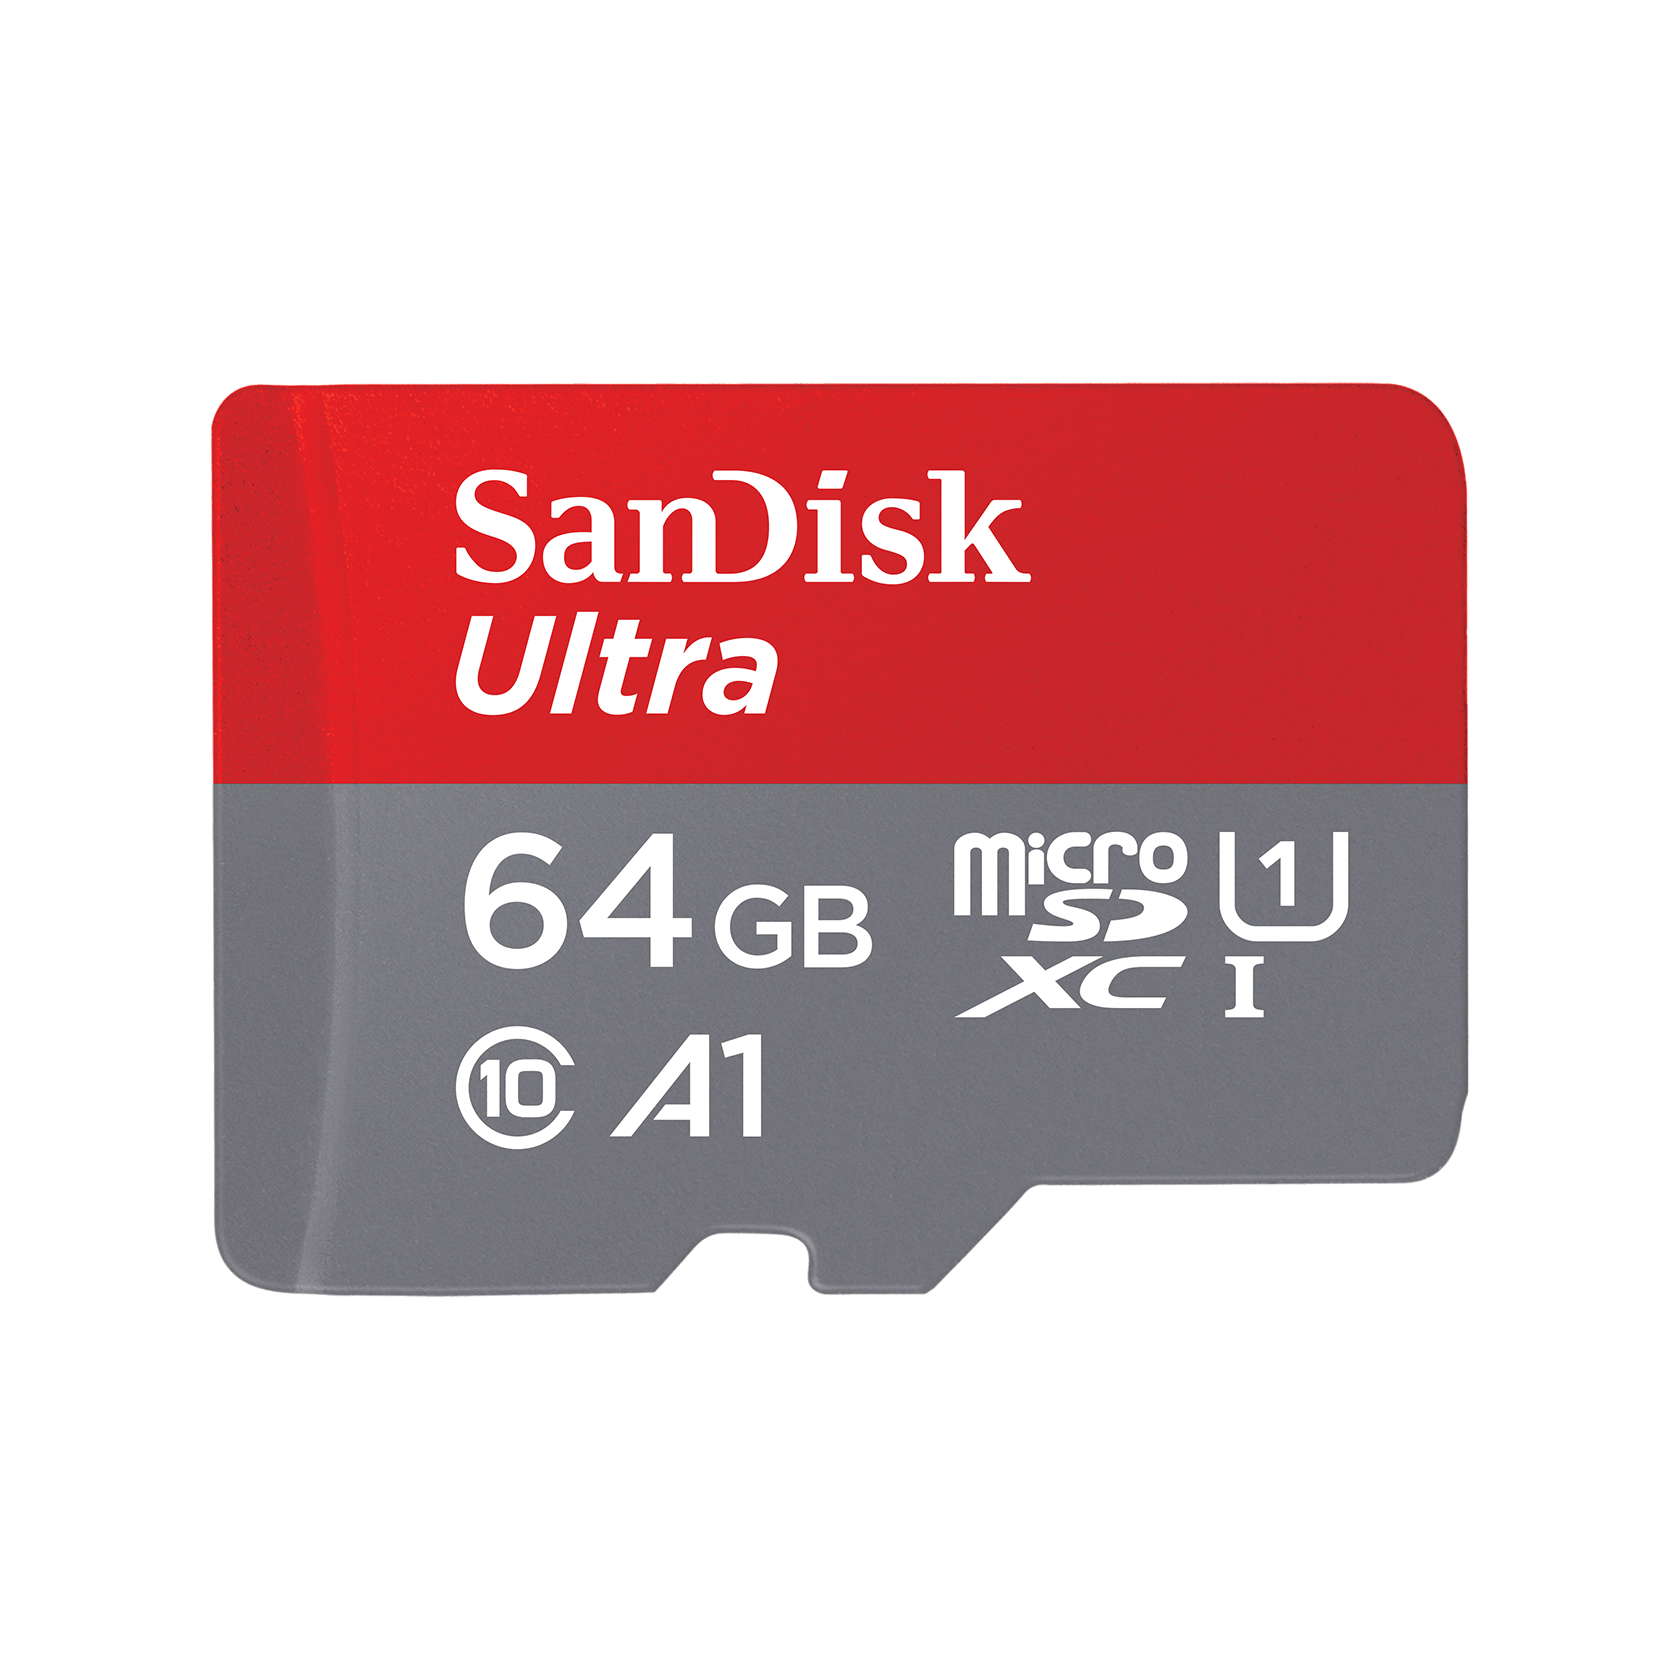 SanDisk Ultra® microSD, UHS-I card, Full HD | Western Digital Store |  Western Digital